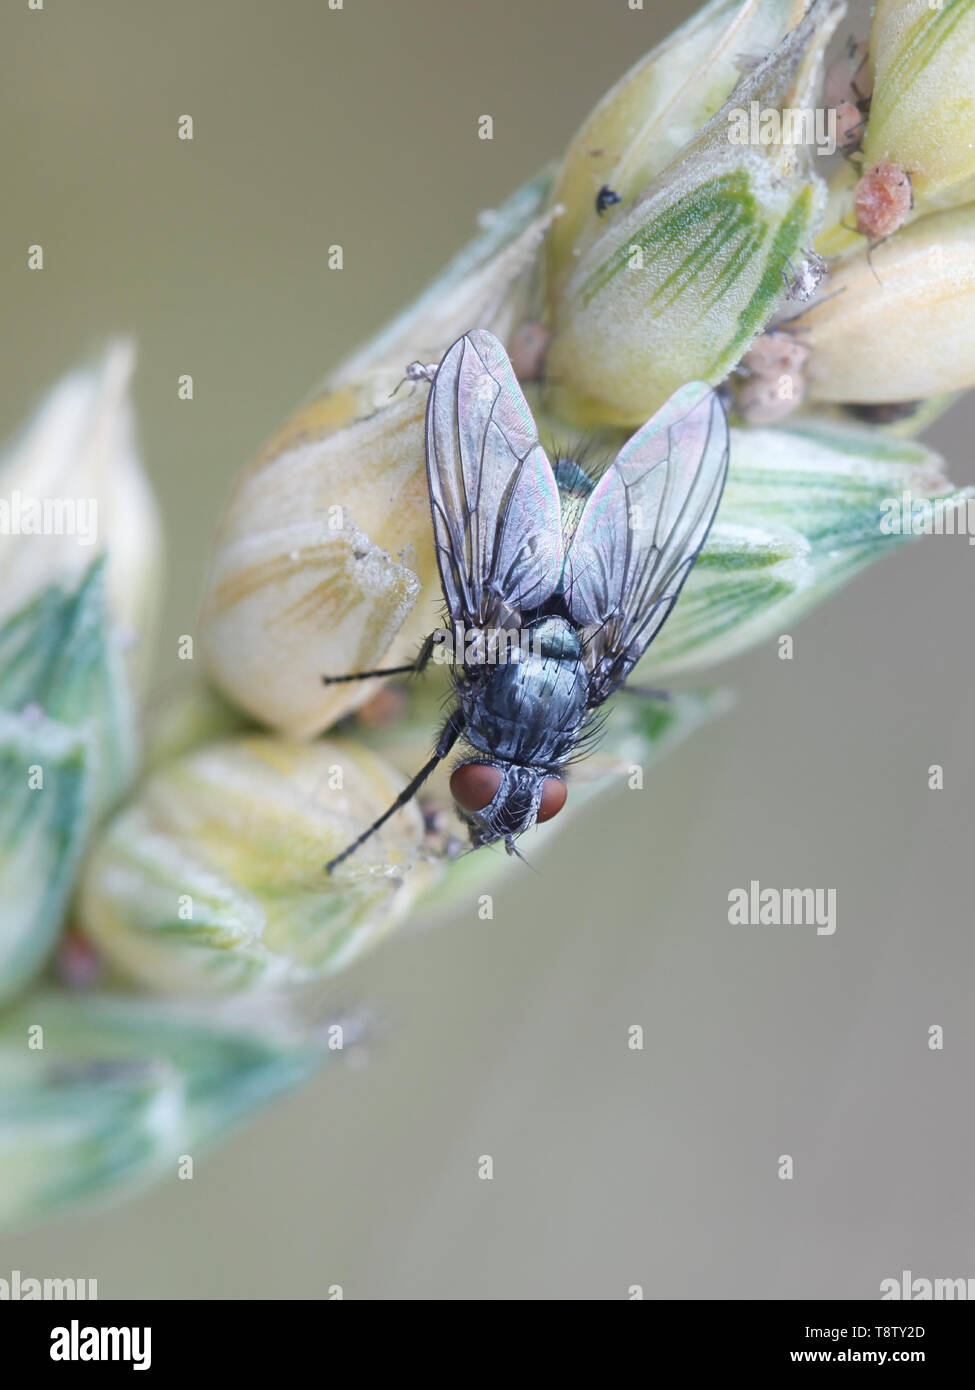 Blow fly, Bellardia sp, resting on wheat Stock Photo